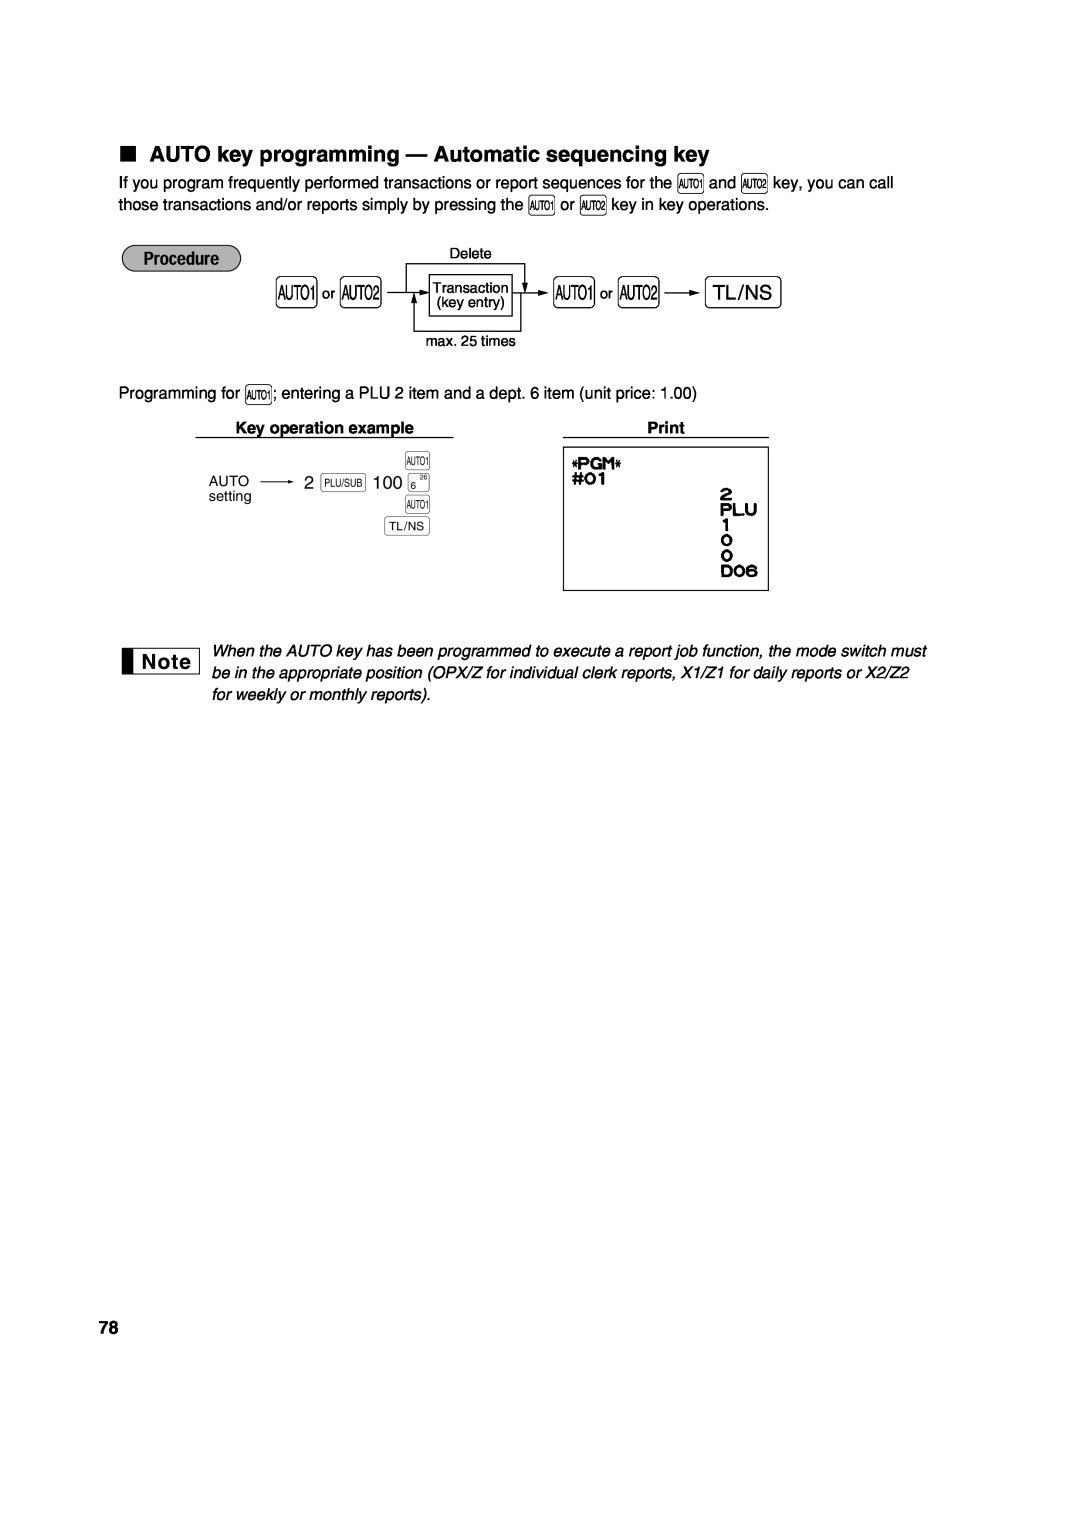 Sharp XE-A303 AUTO key programming - Automatic sequencing key, AUTO 2 p100 §, Key operation example, Print 